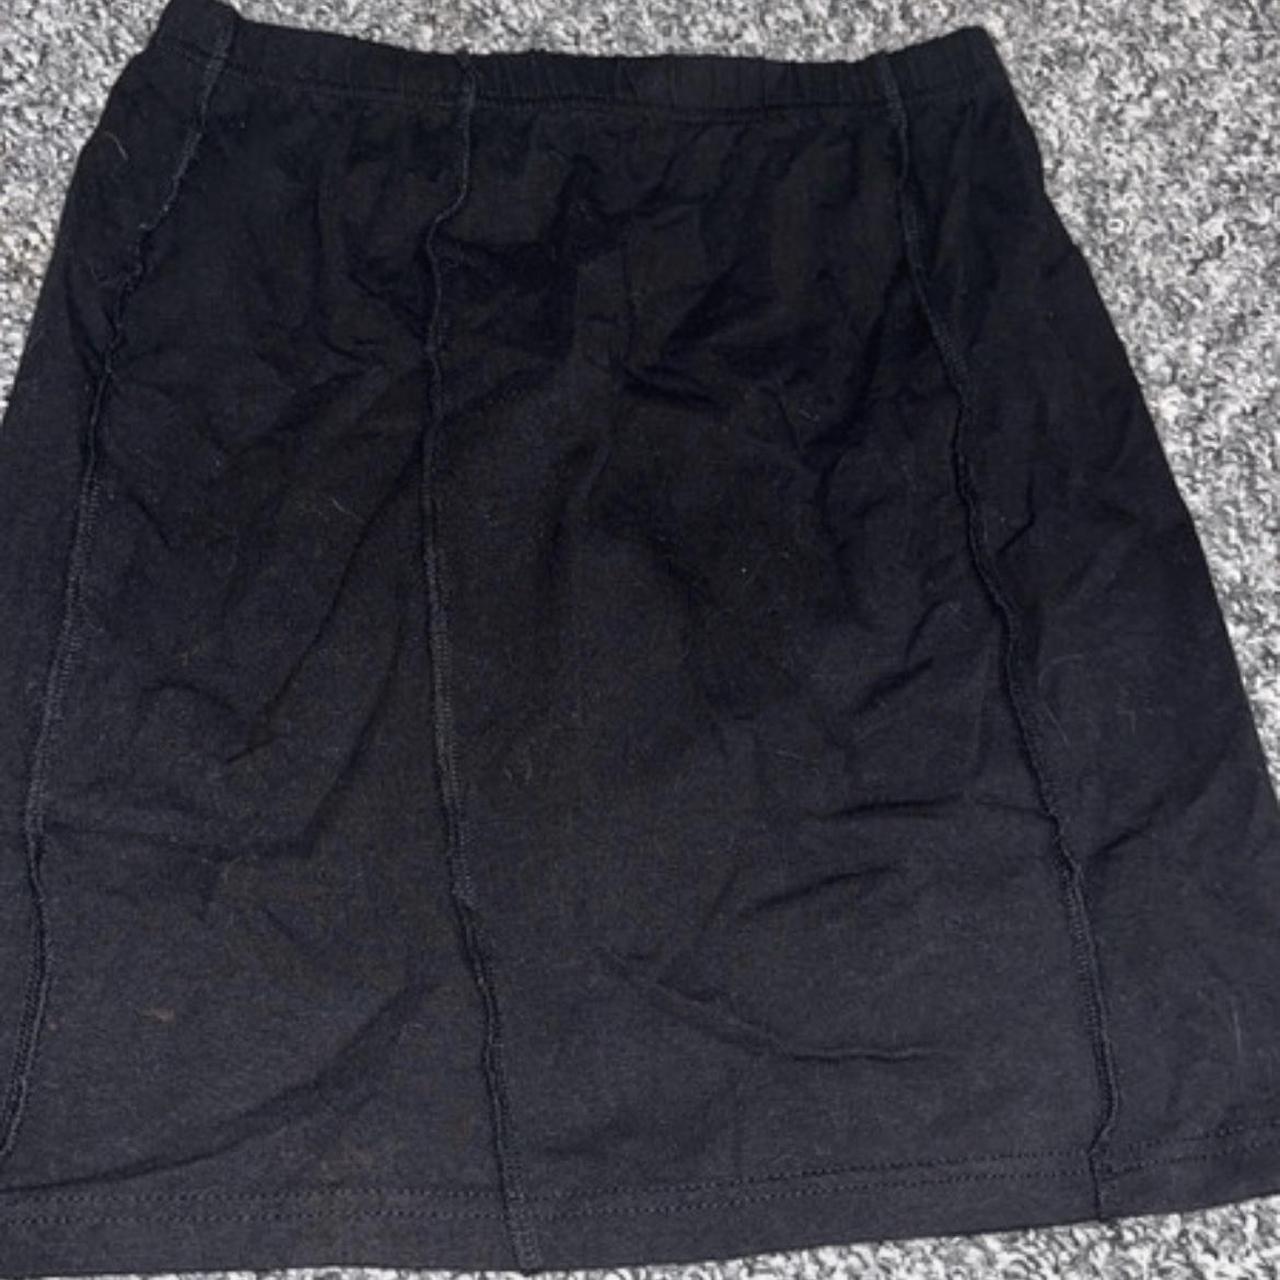 Black mini skirt Plt shape Worn once - Depop